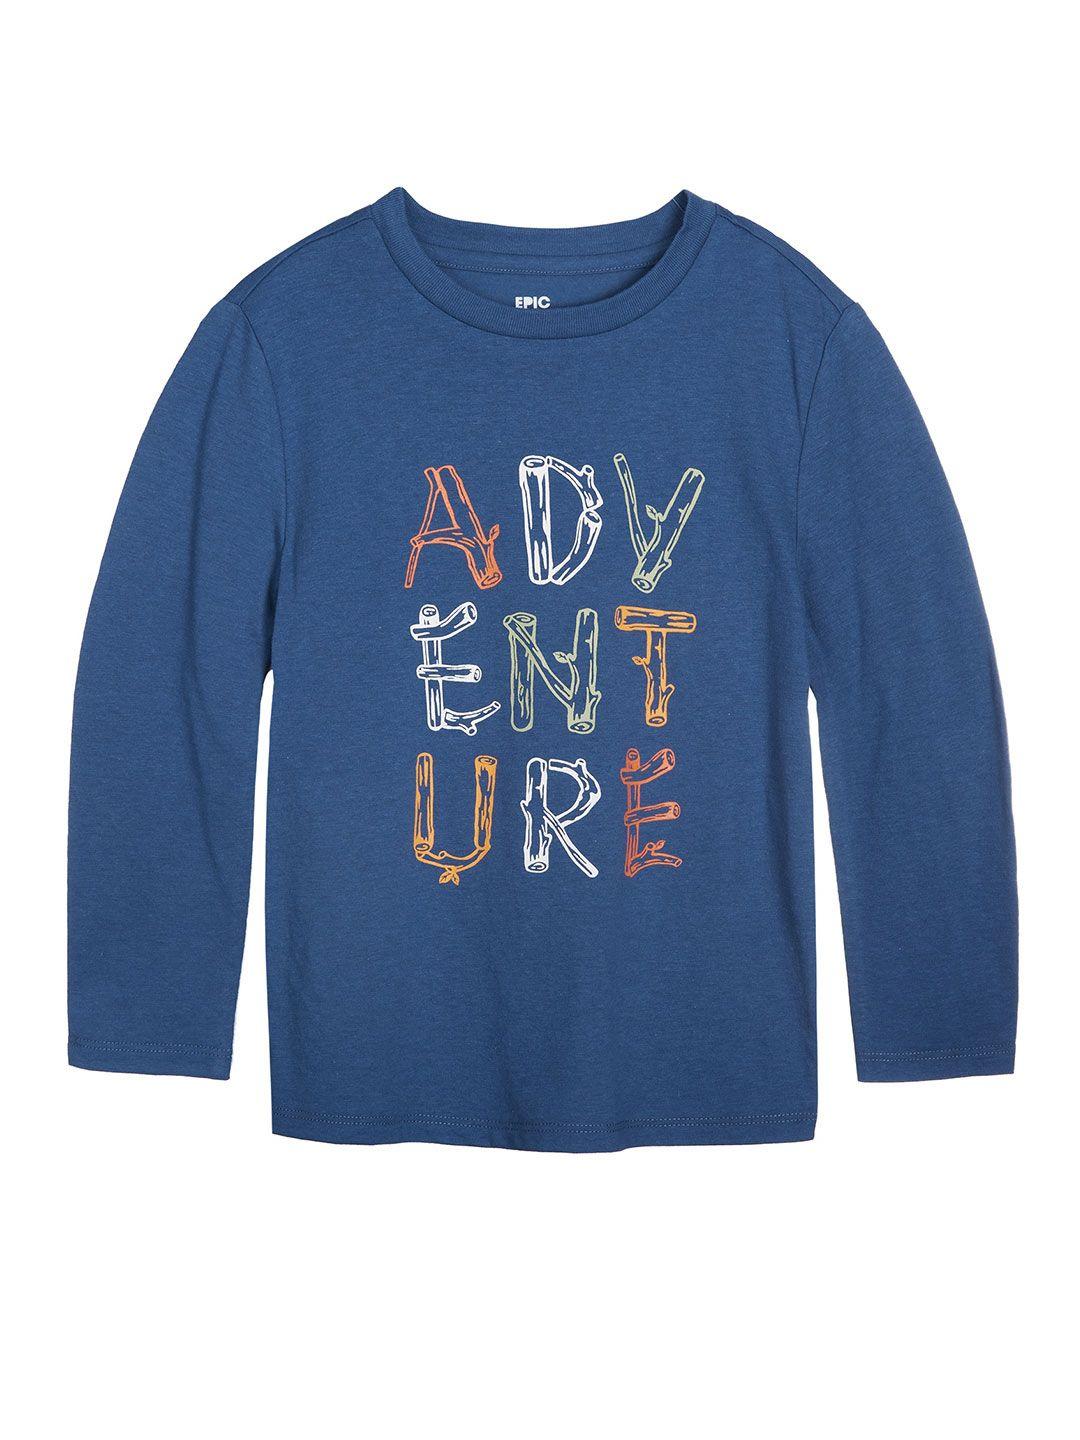 macy's epic threads boys blue & orange typography printed t-shirt